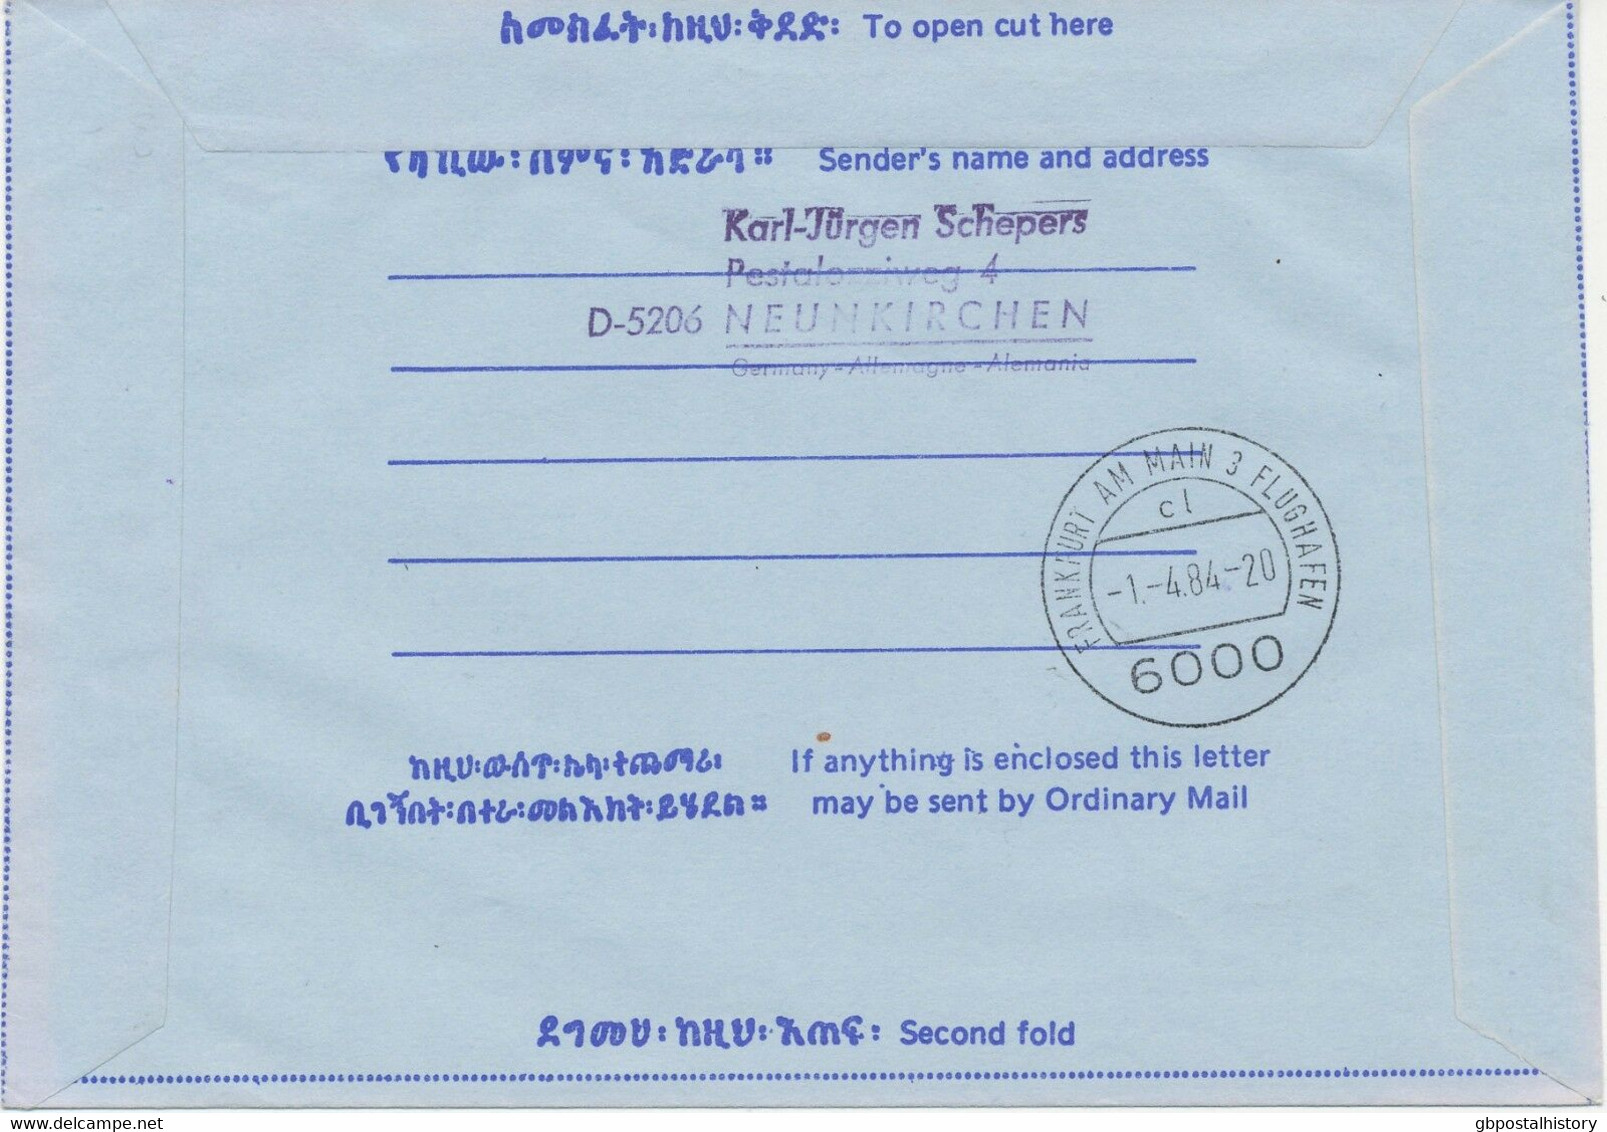 ETHIOPIA 1984 50C Capricorn Air Letter First Flight LH 537 ADDIS ABABA-FRANKFORT - Ethiopie